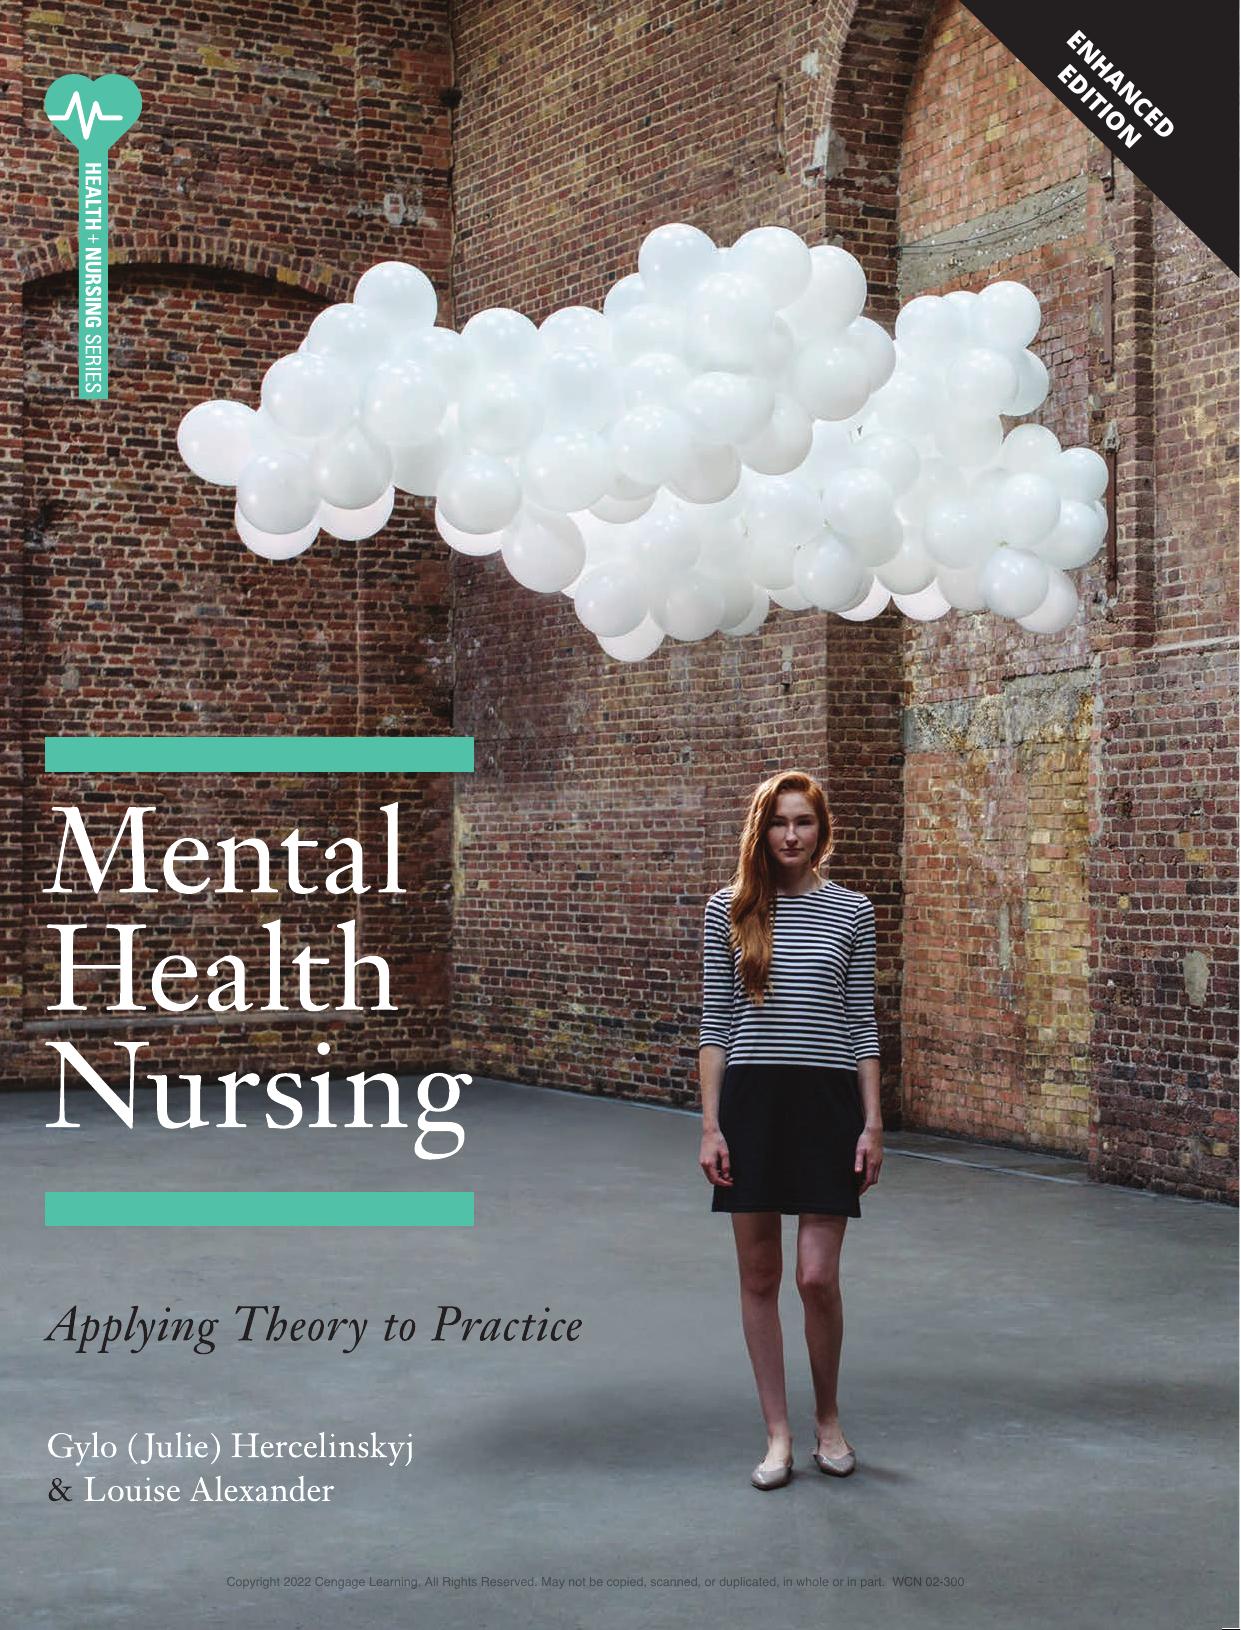 Mental health nursing: Applying theory to practice